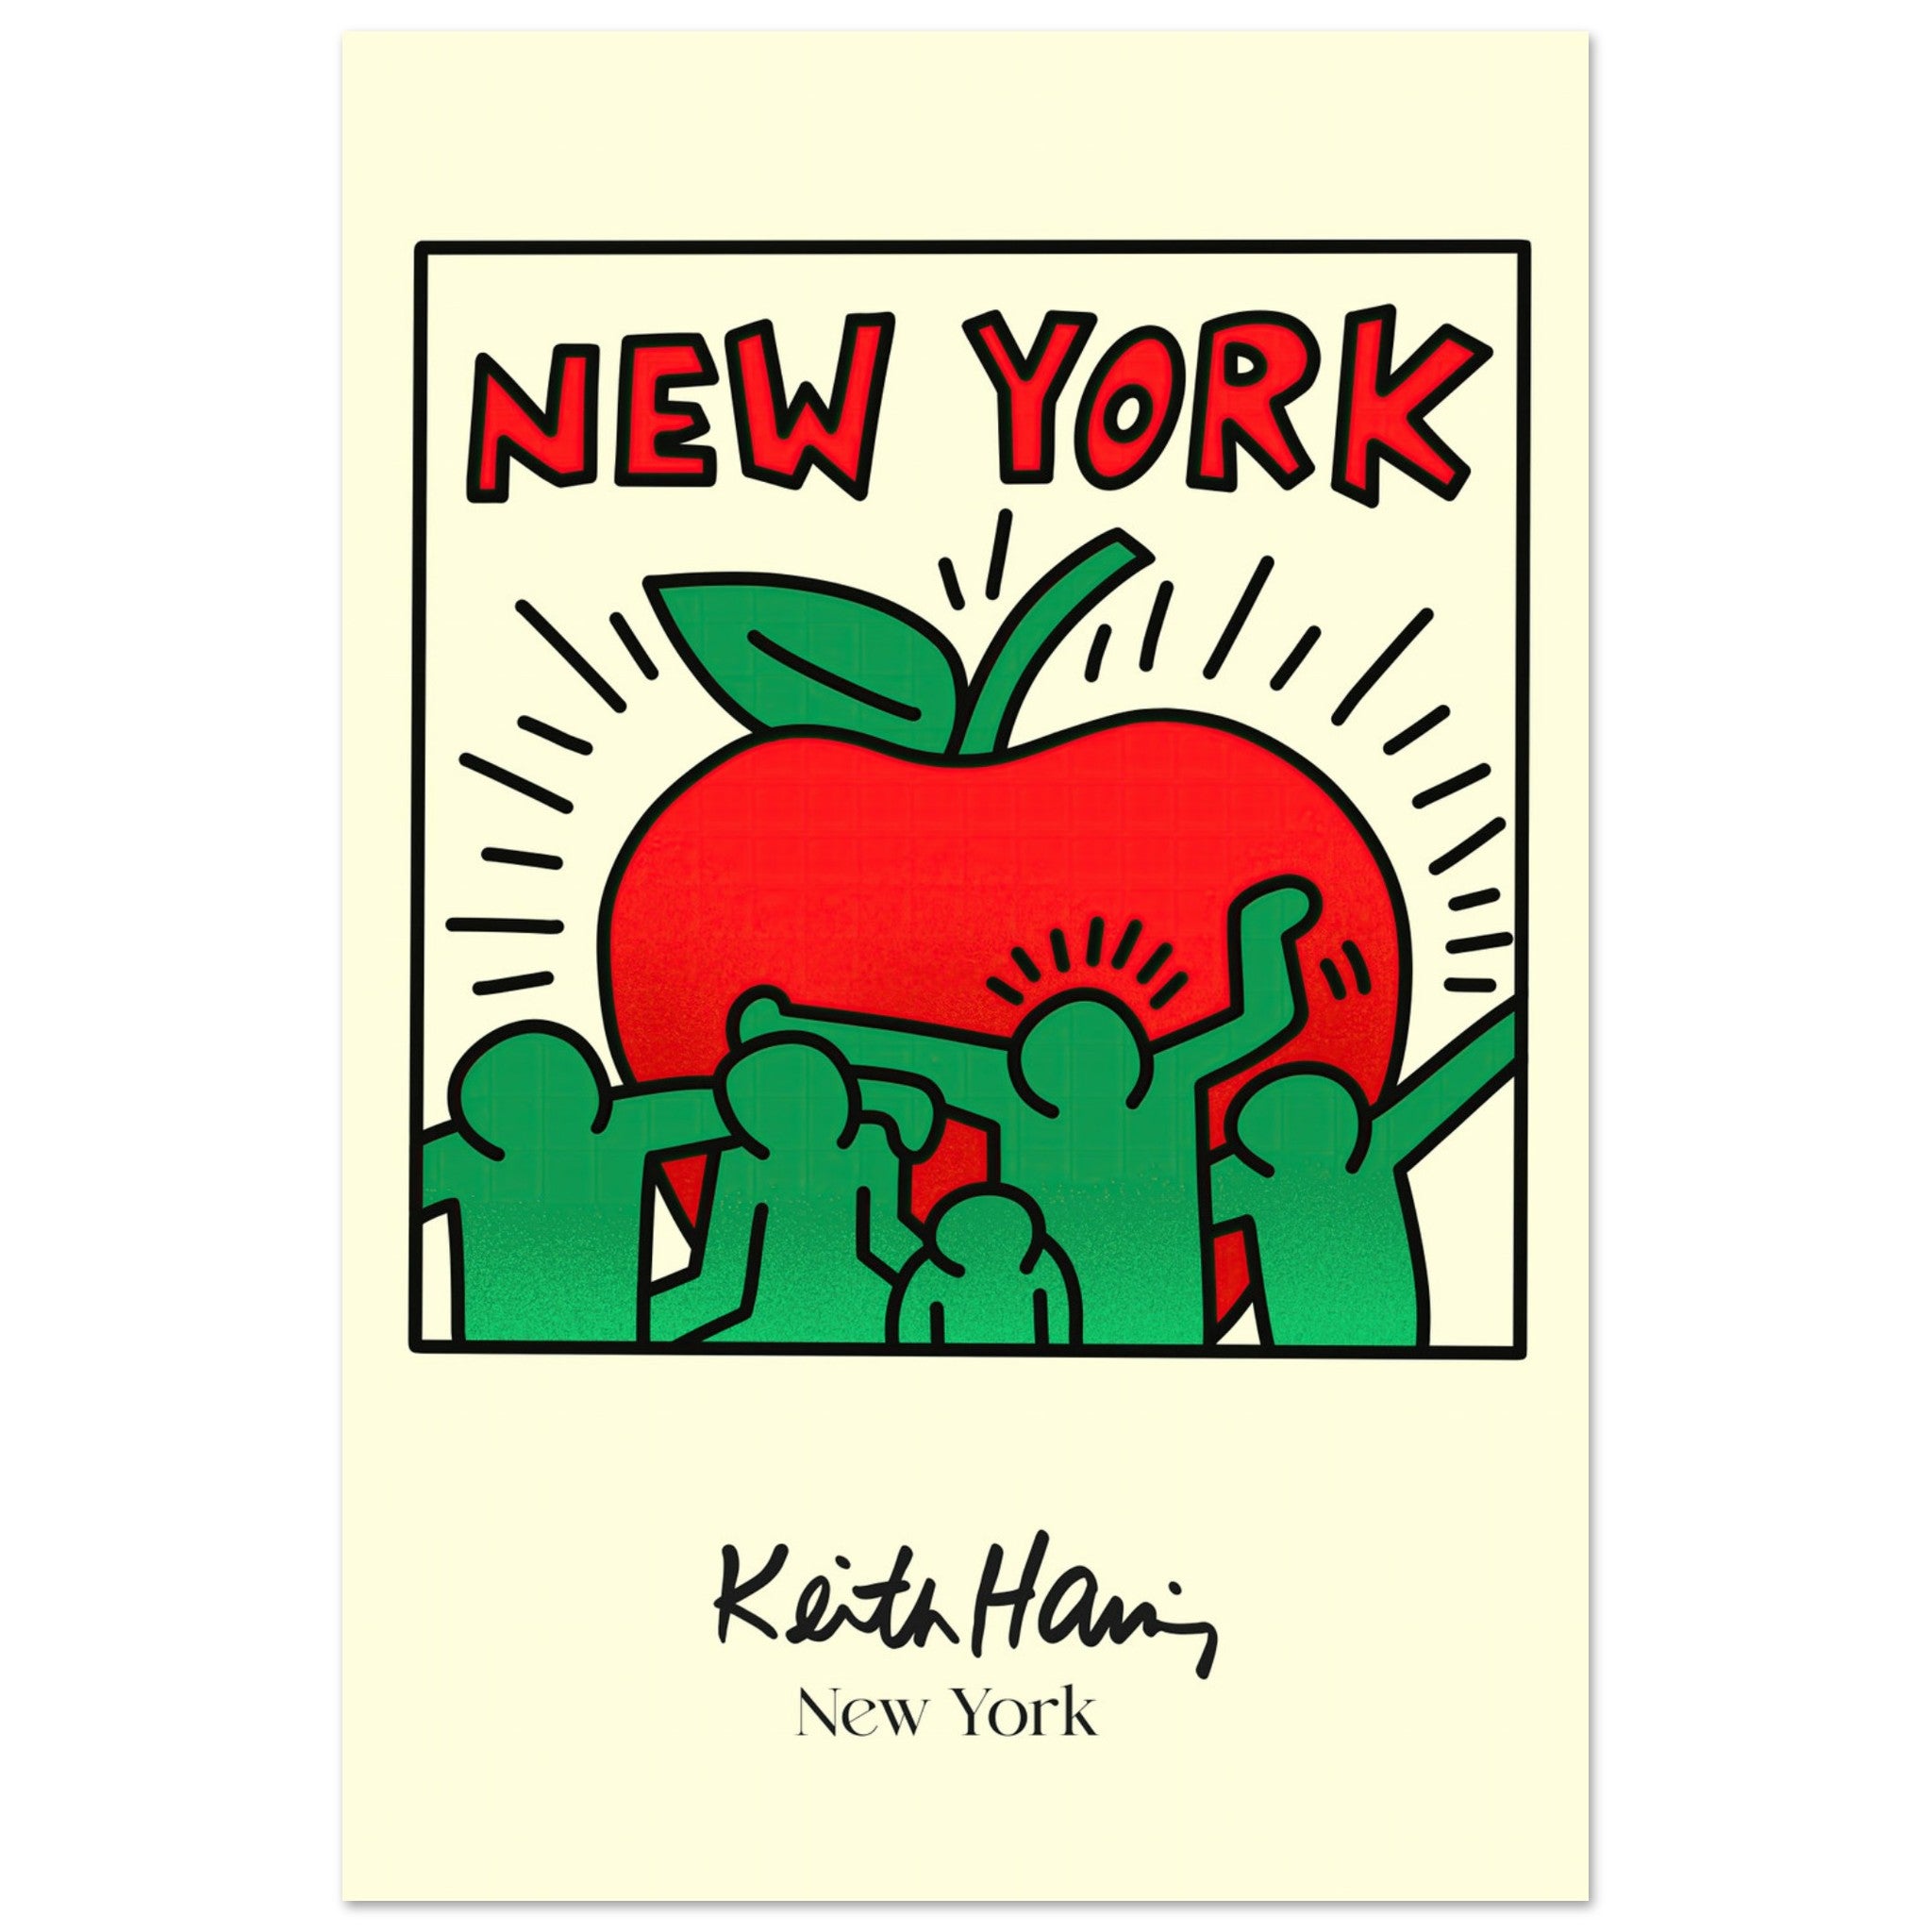 Keith Haring "New York"